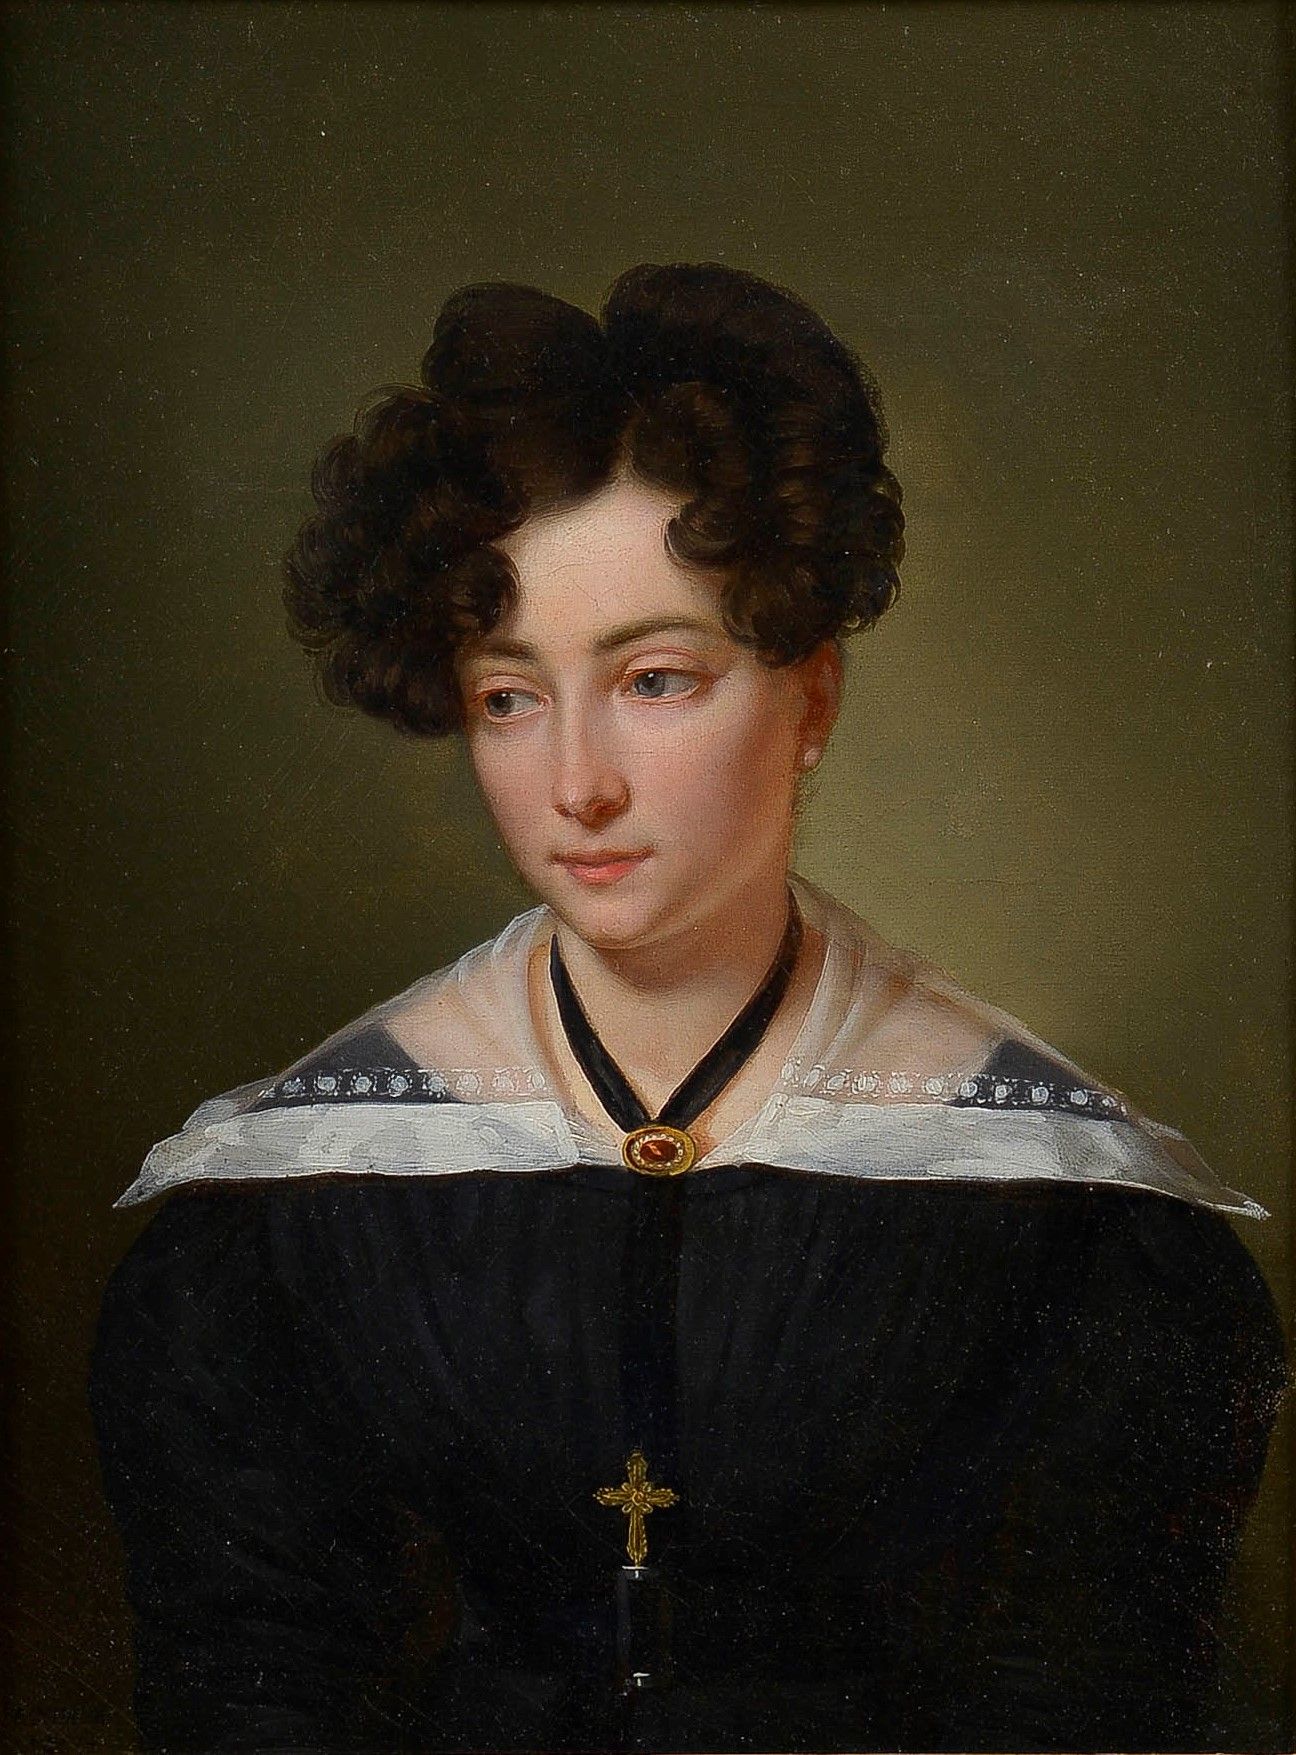 Null 让-马里-雅克曼 (1789-1858)

一个年轻女人的肖像，1826年

布面油画，左下方有签名和日期

32,5 x 24,5 cm

参考资料&hellip;